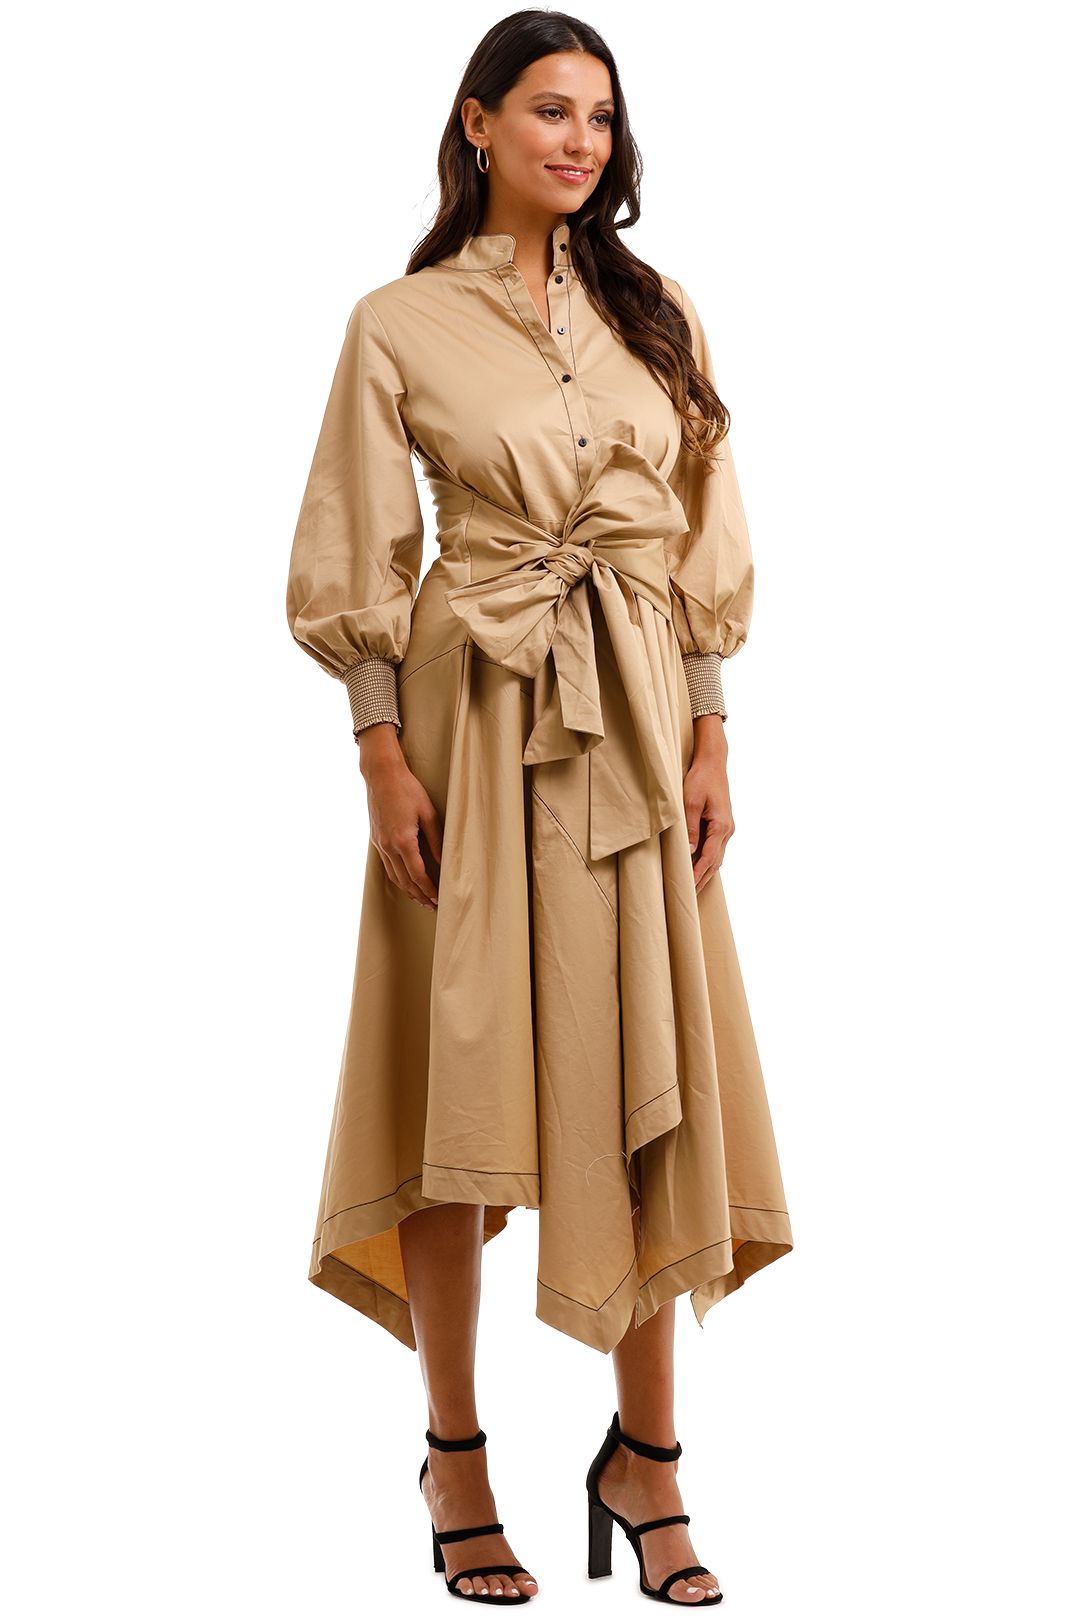 Husk Latin Dress Camel Asymmetric Skirt